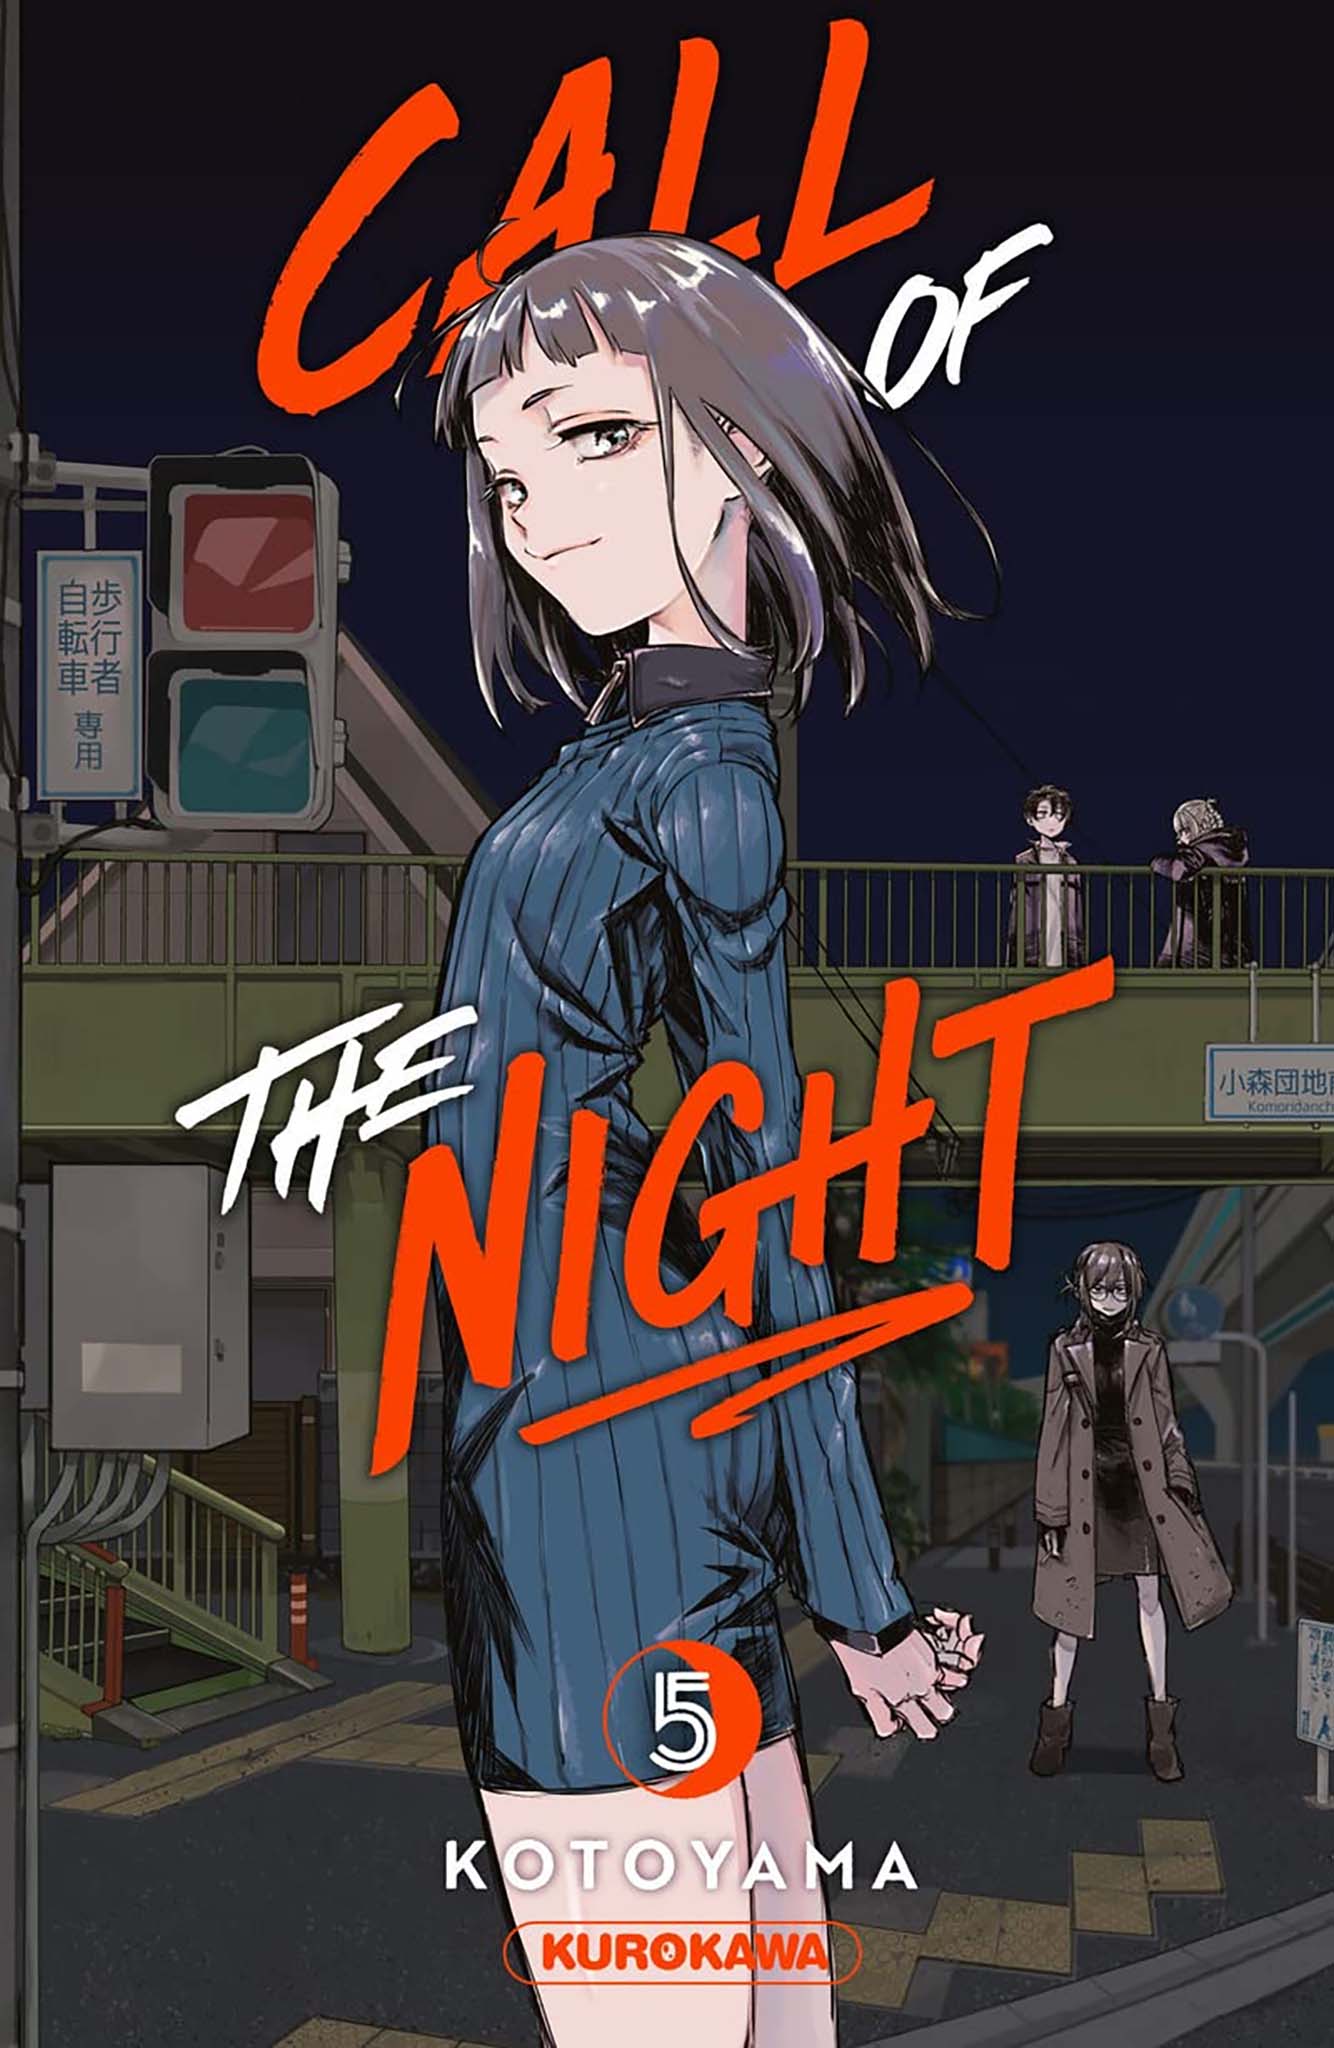 Tome 5 du manga Call of the Night.